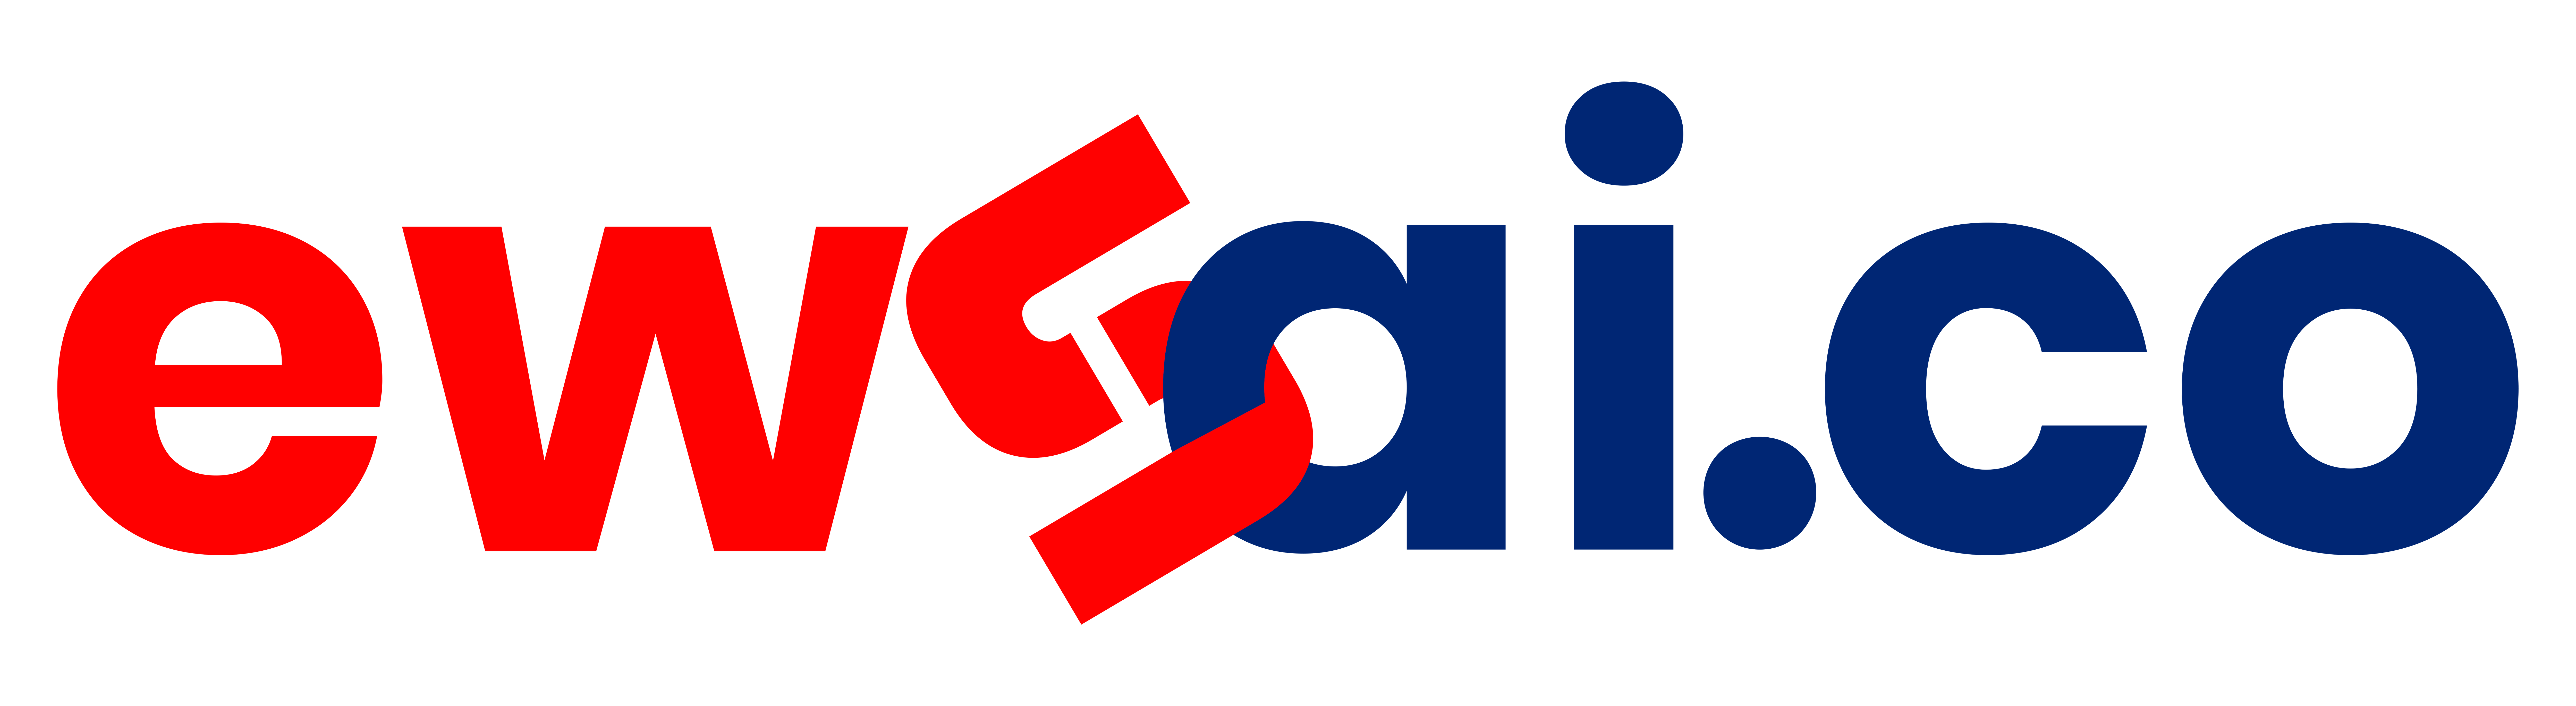 ewsai.co logo image